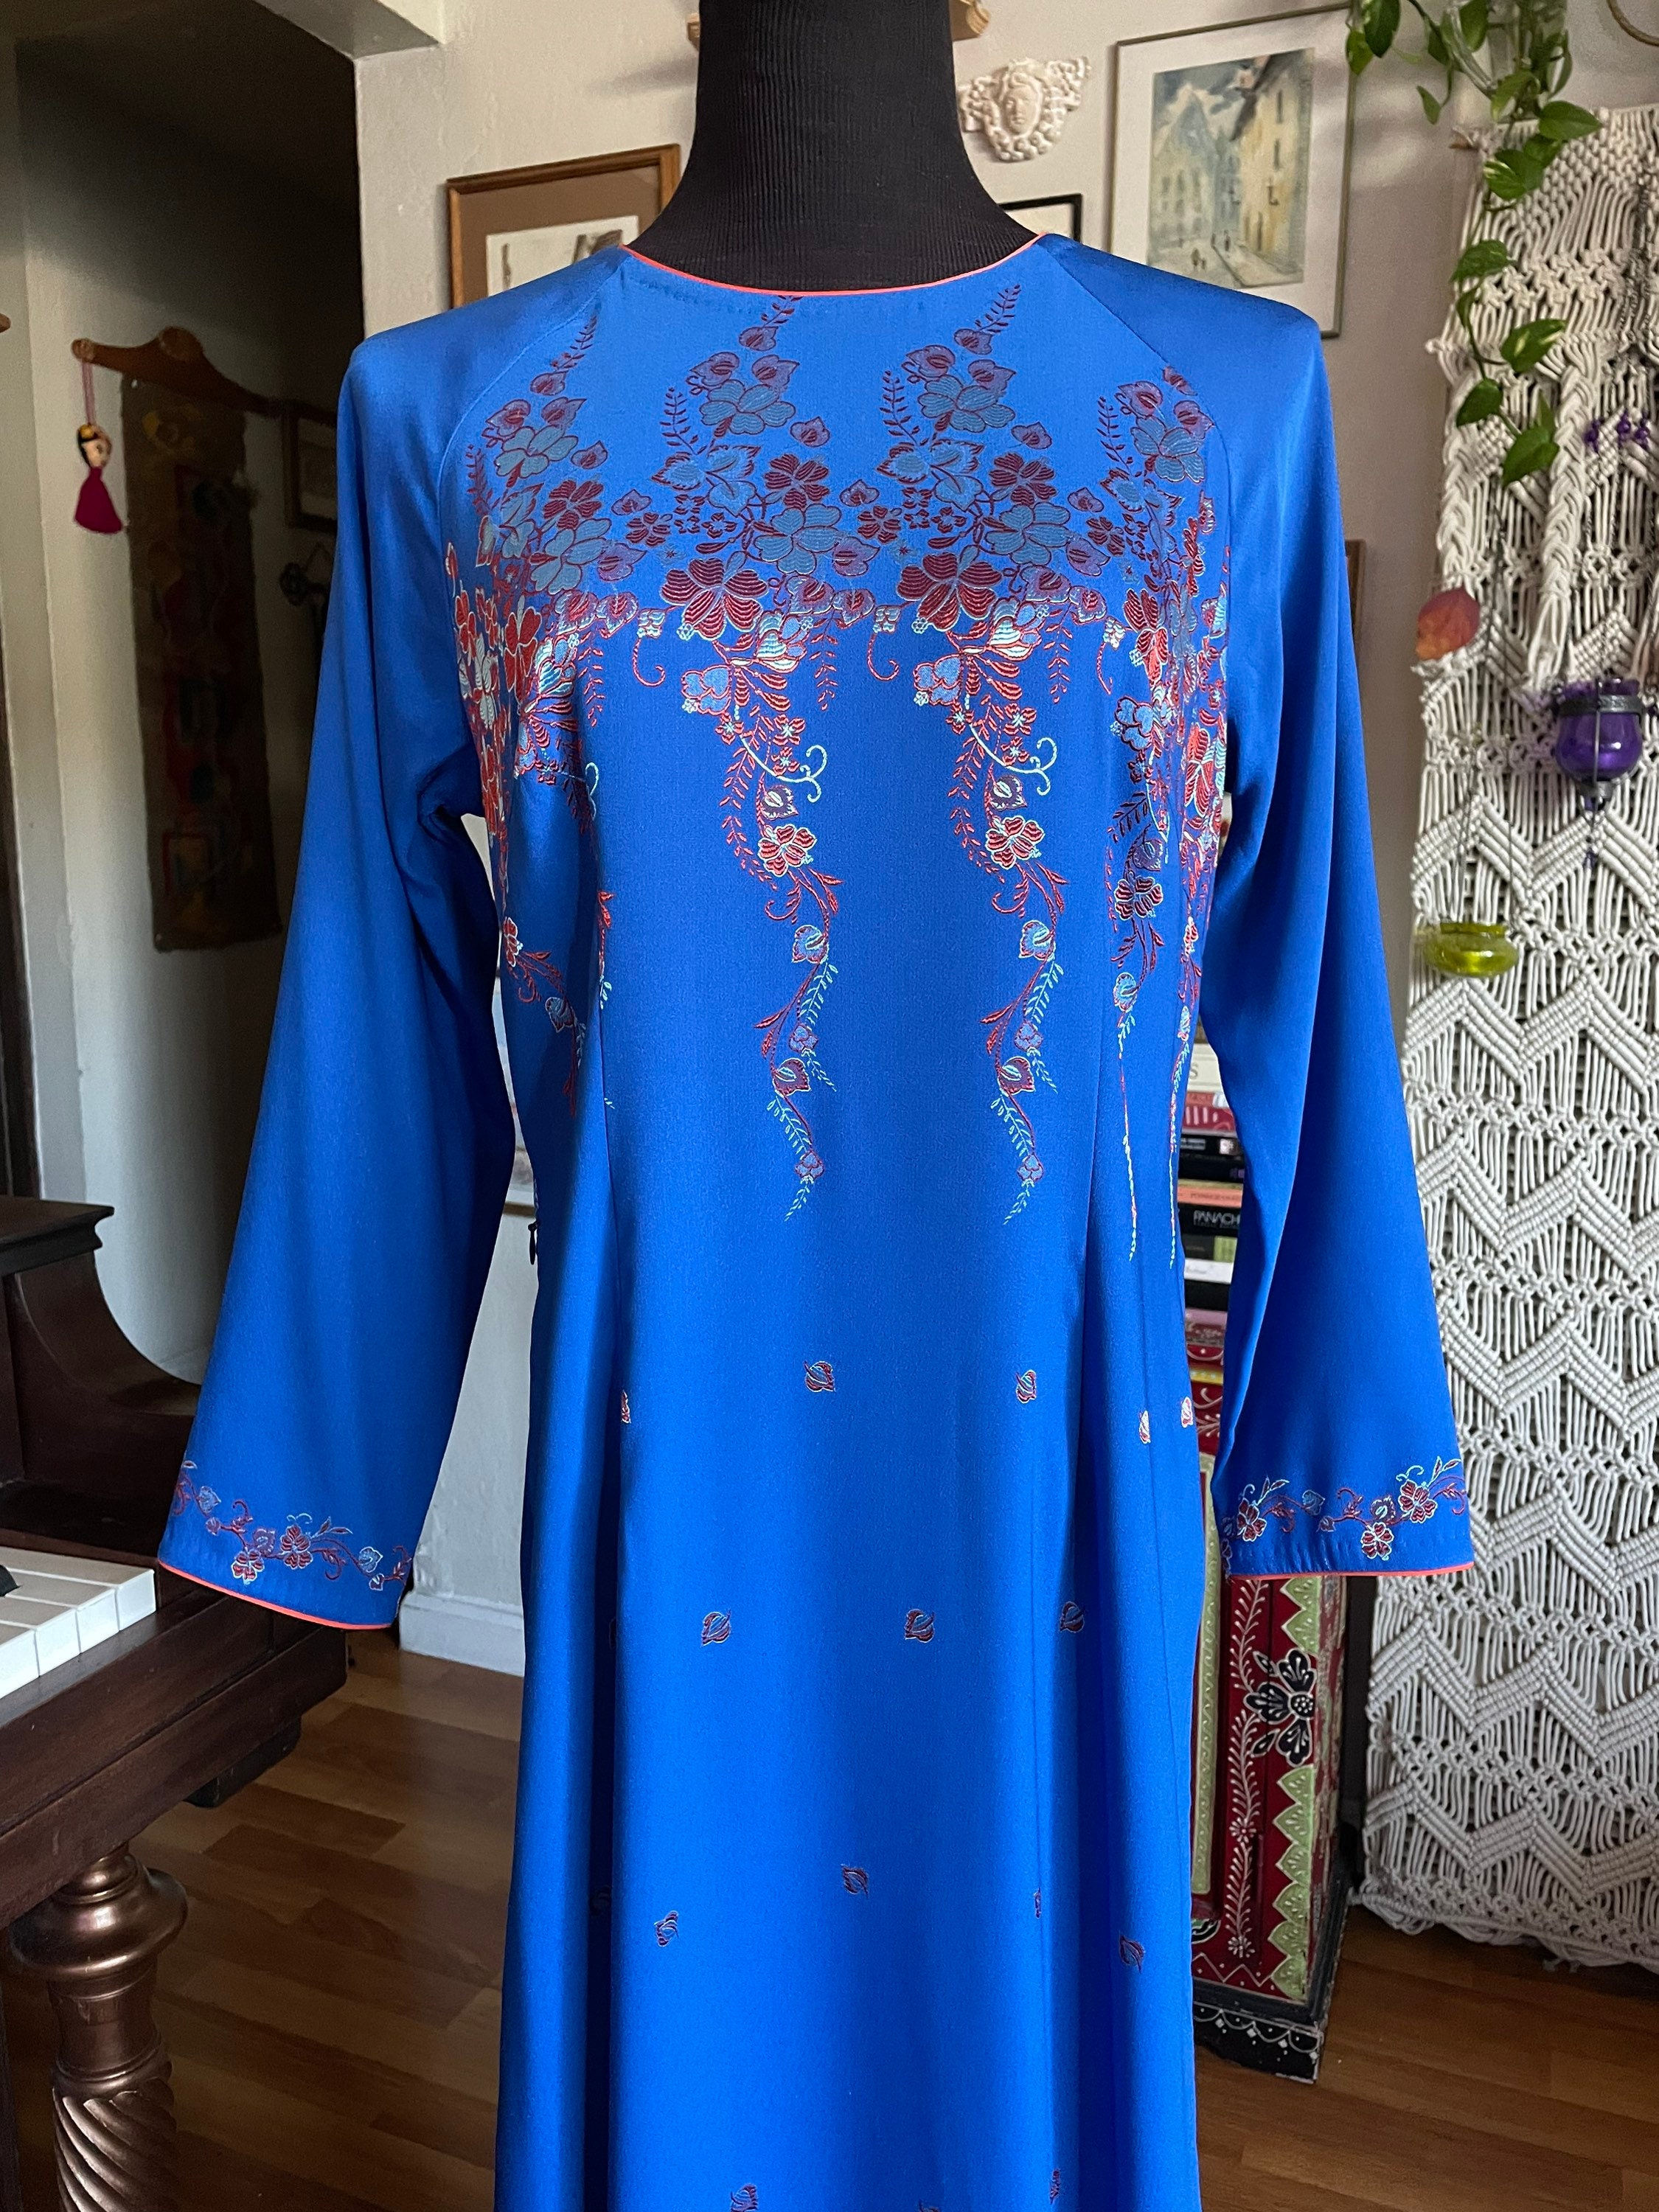 Folkwear Vietnamese Ao Dai #139 Tunic Dress Pants Vietnam Sewing Pattern  (Pattern Only) folkwear139